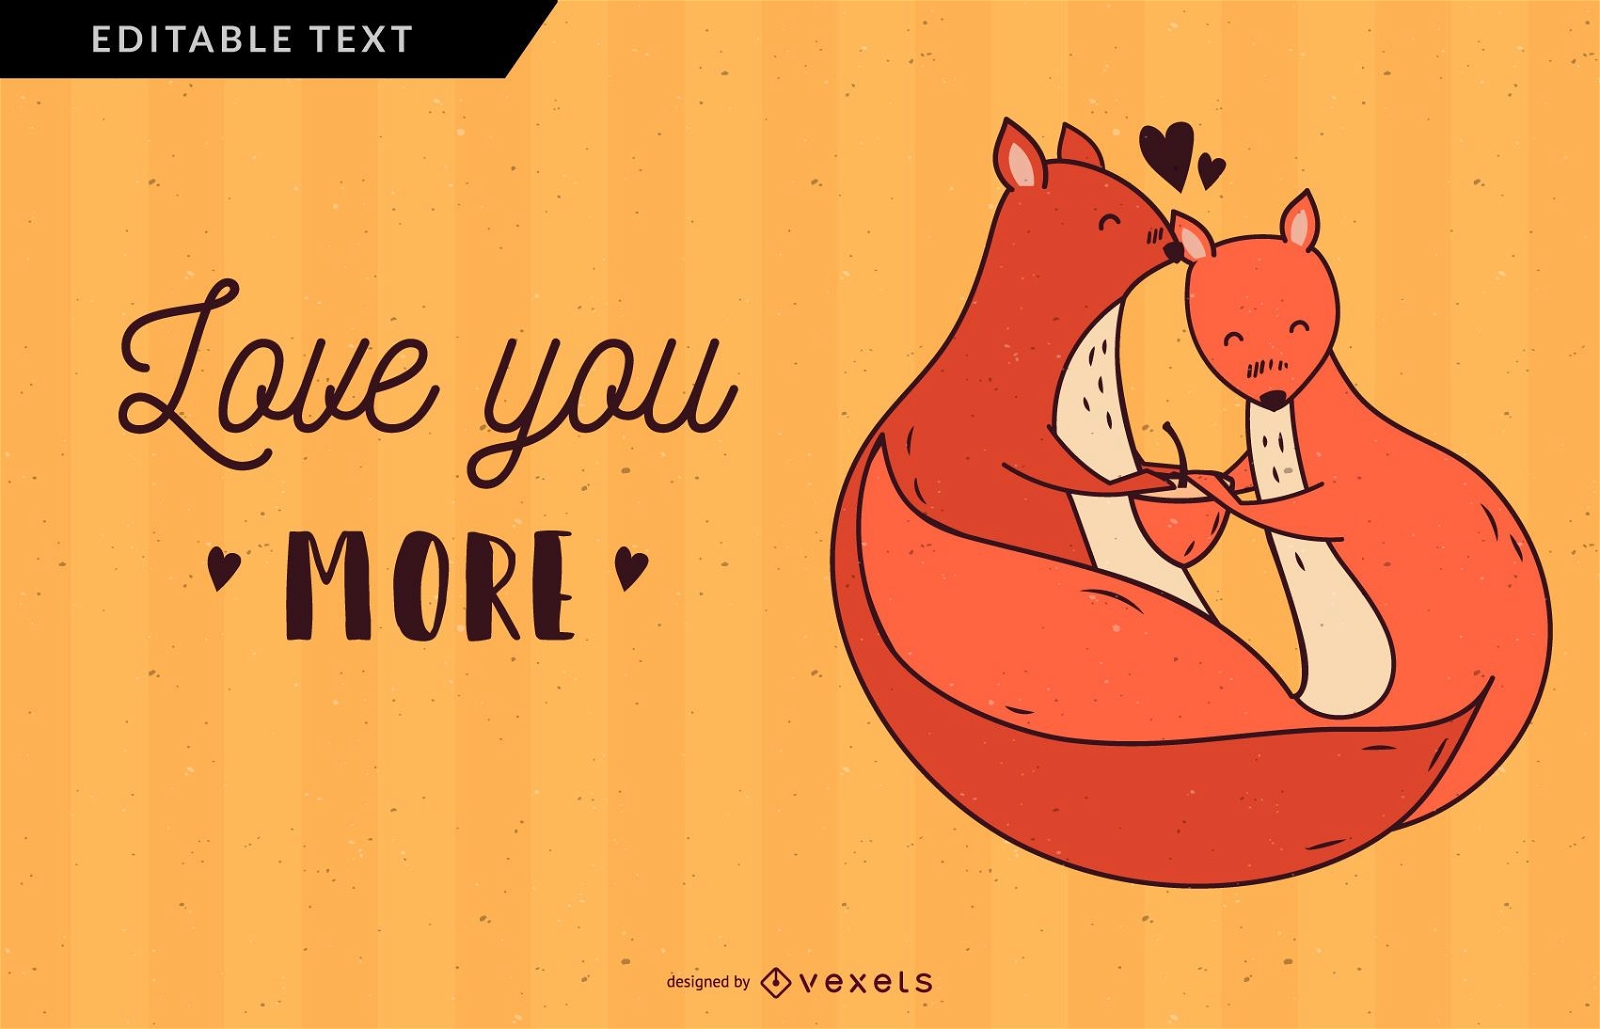 Love you more squirrel illustration